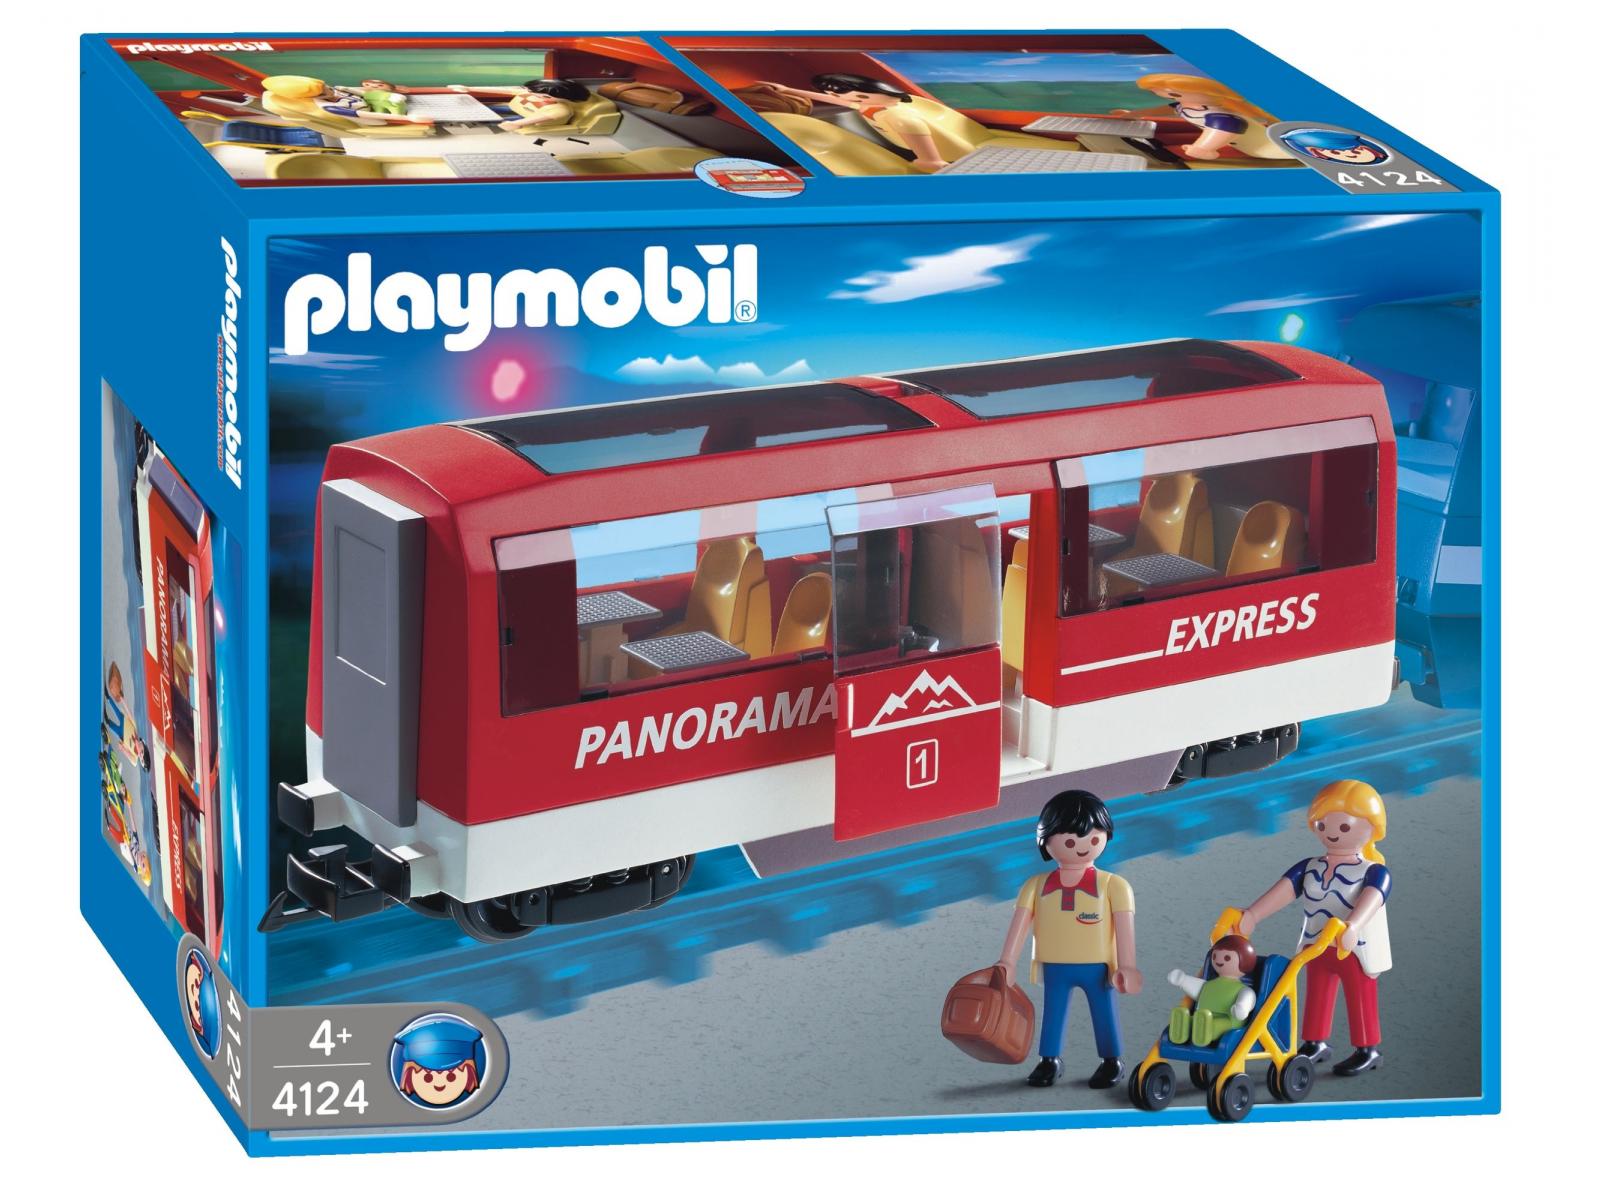 Playmobil - Voyageurs et wagon